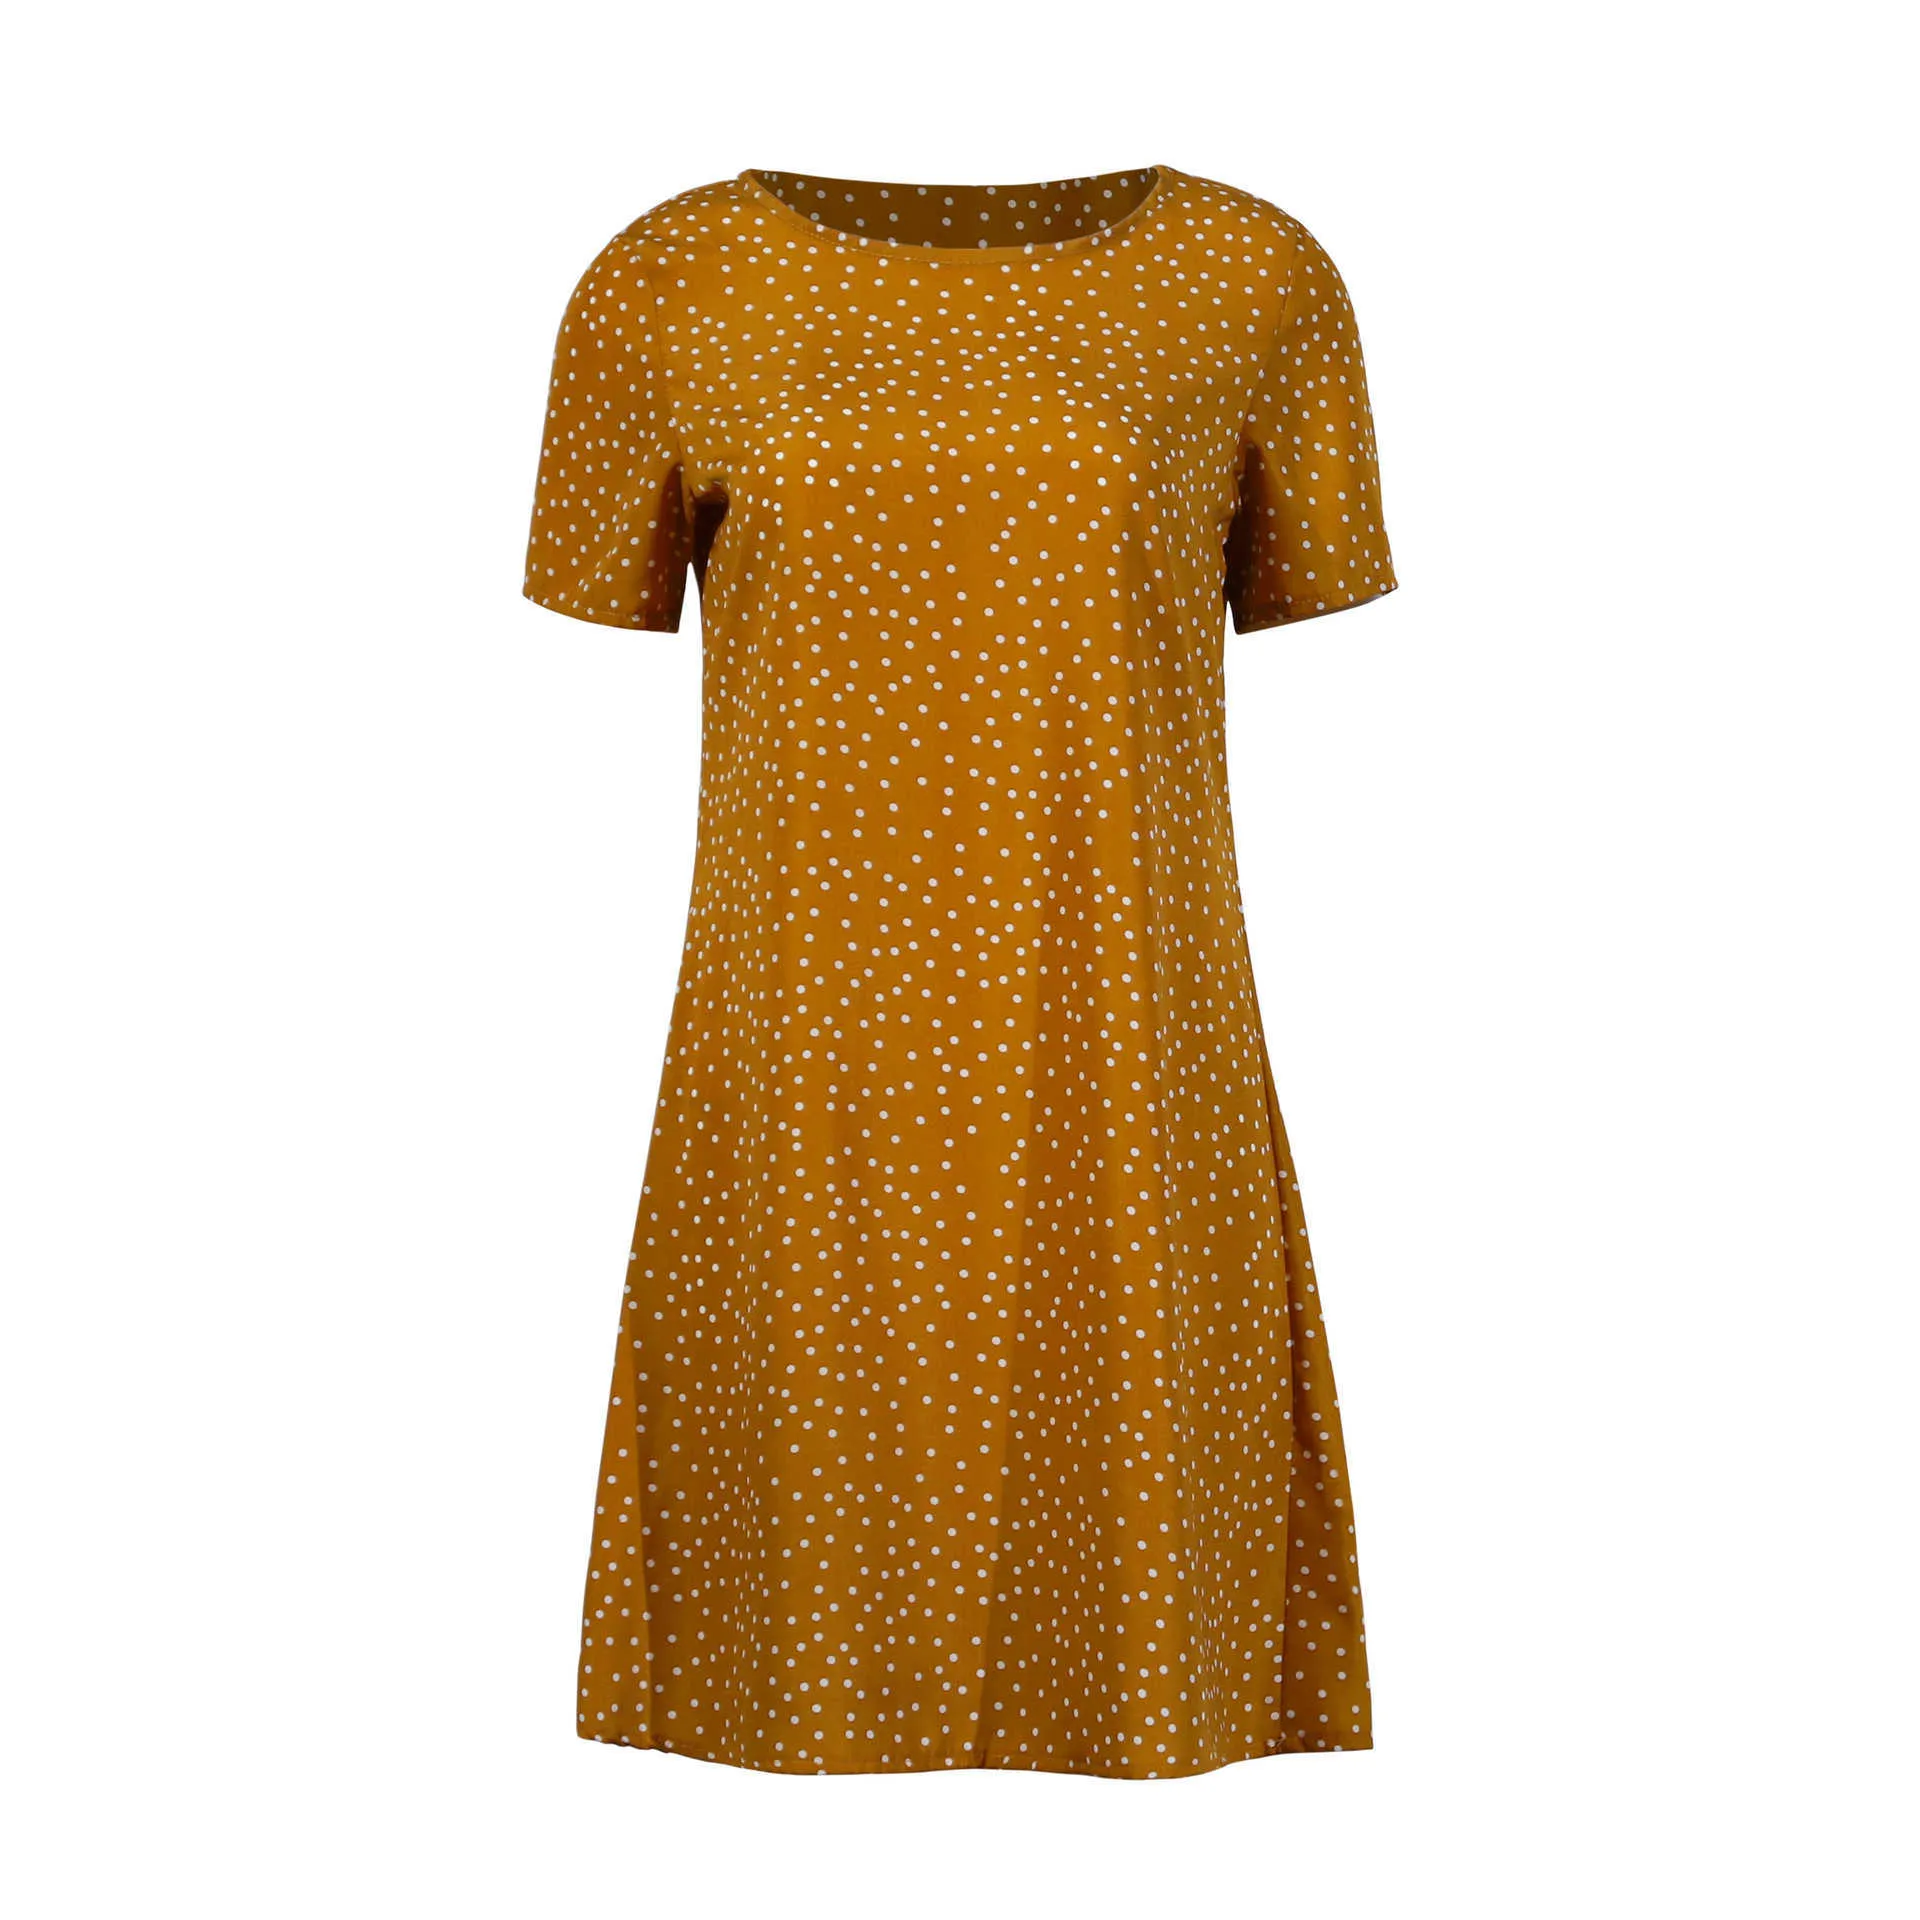 Boho Yellow Polka Dot Women Dress Casual O-Collo manica corta Summer Beach Mini abiti W9166 210526